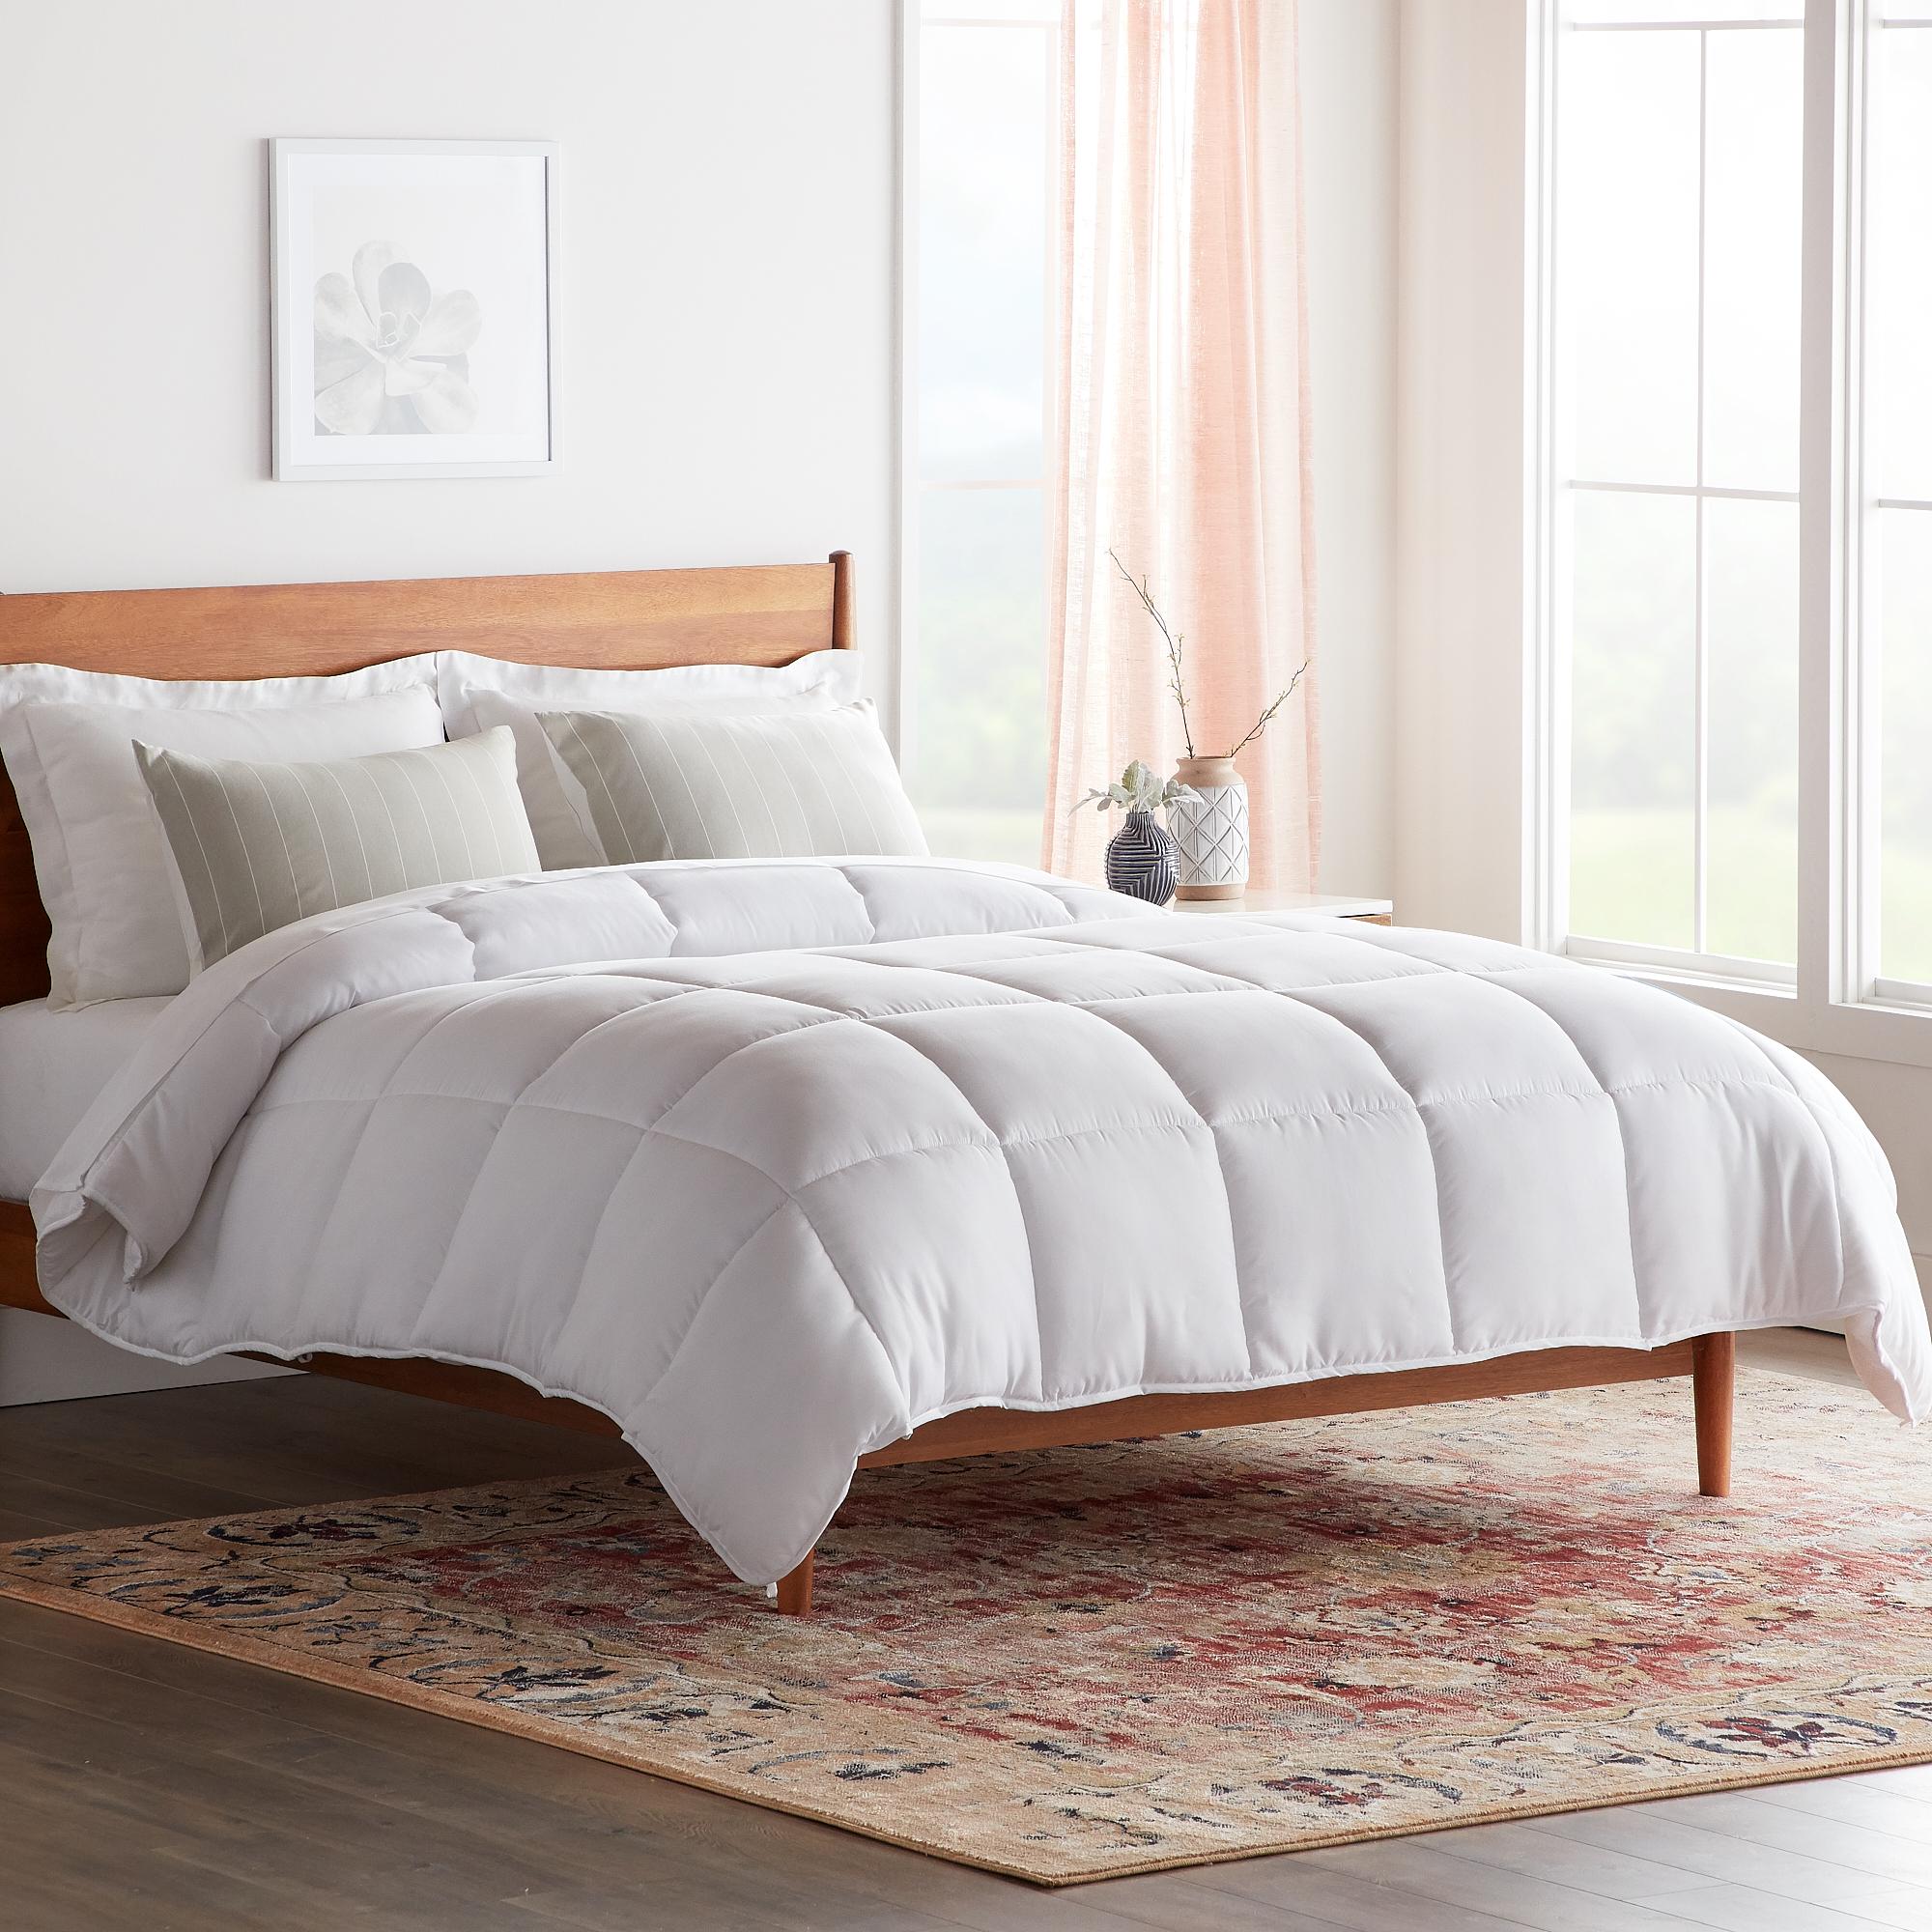 Rest Haven All-Season Down Alternative Comforter, Oversized King, White - image 3 of 14